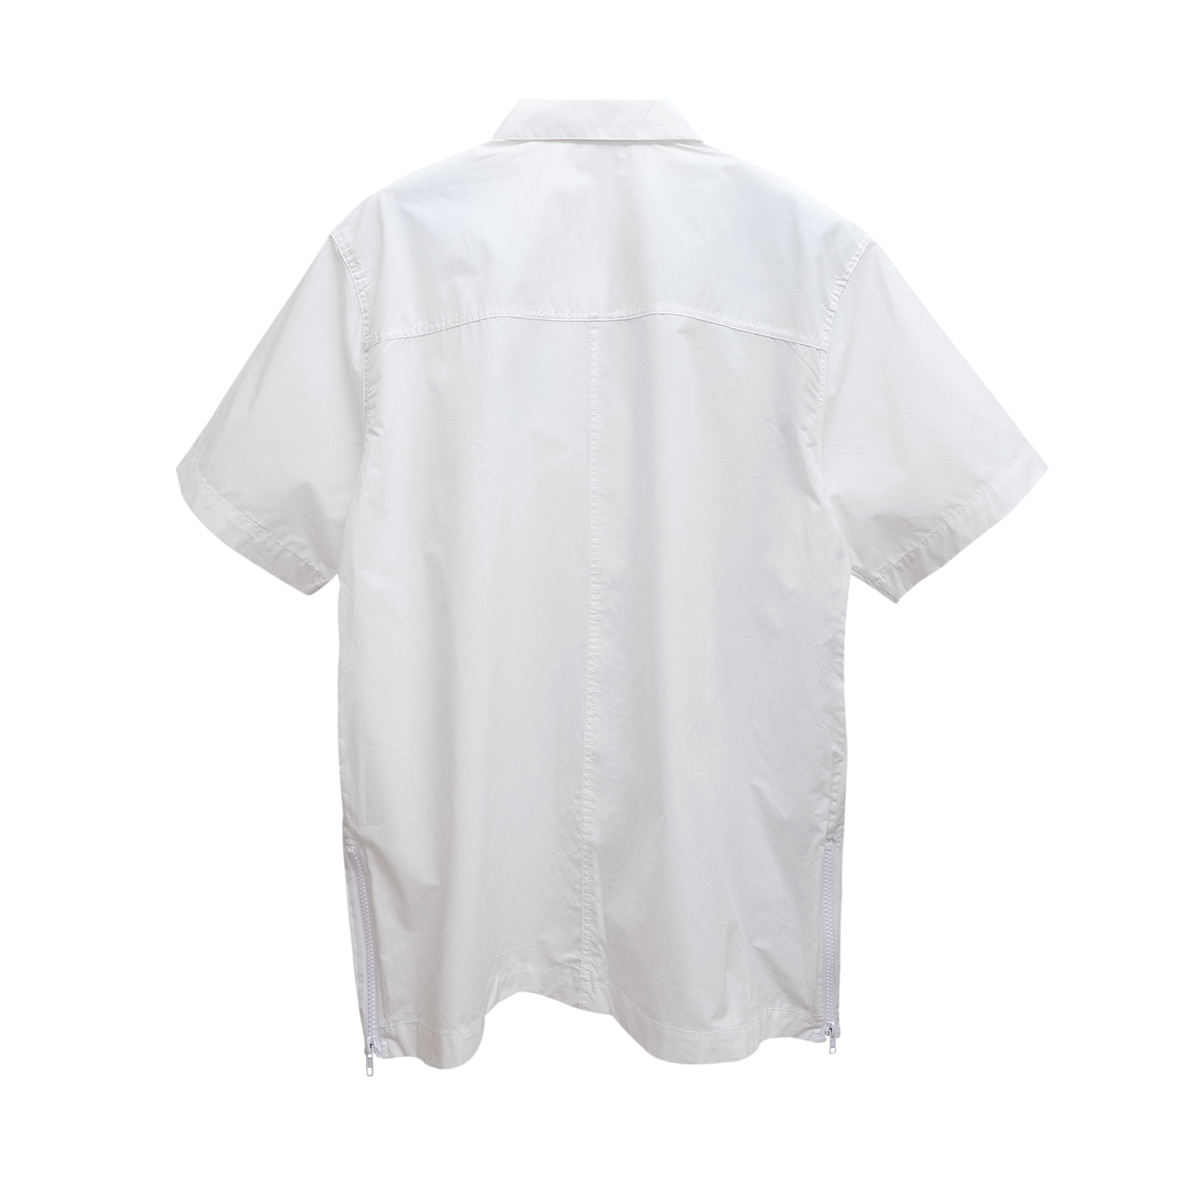 Gotha.2 Zip Shirt (white)